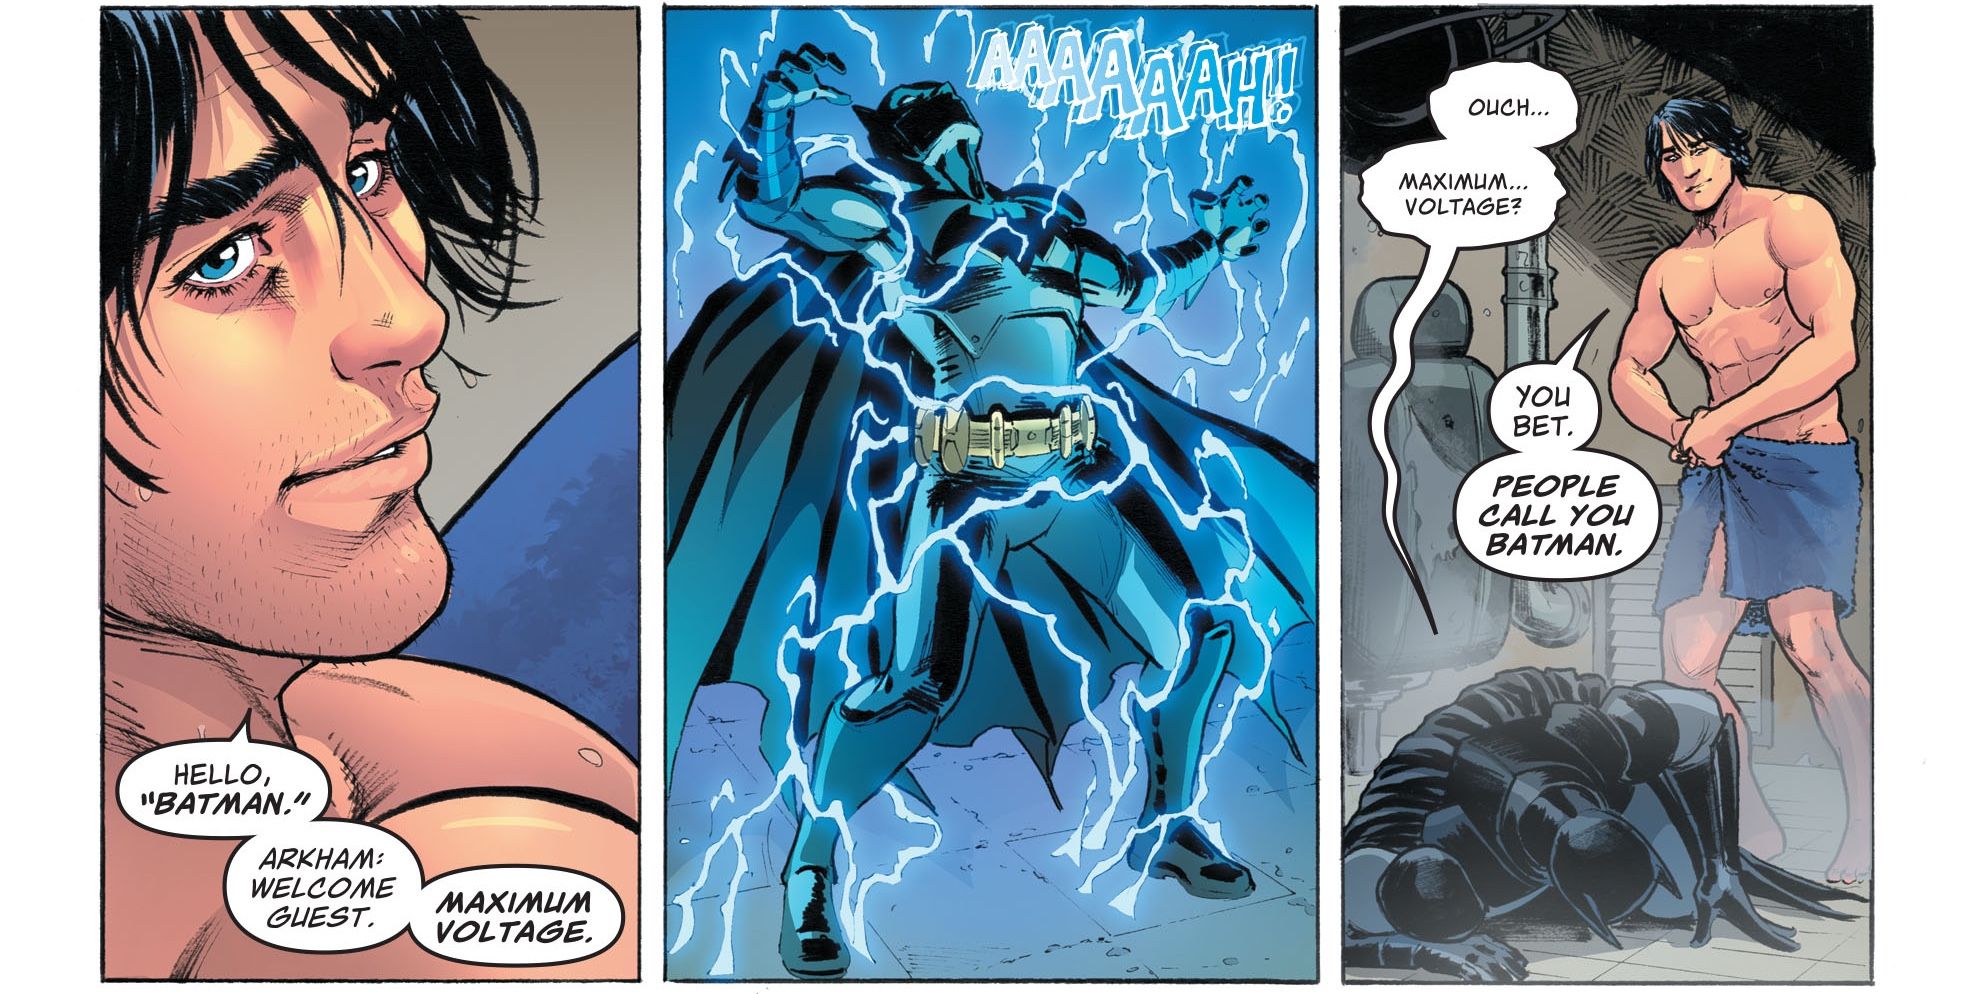 Nightwing shocking new Batman